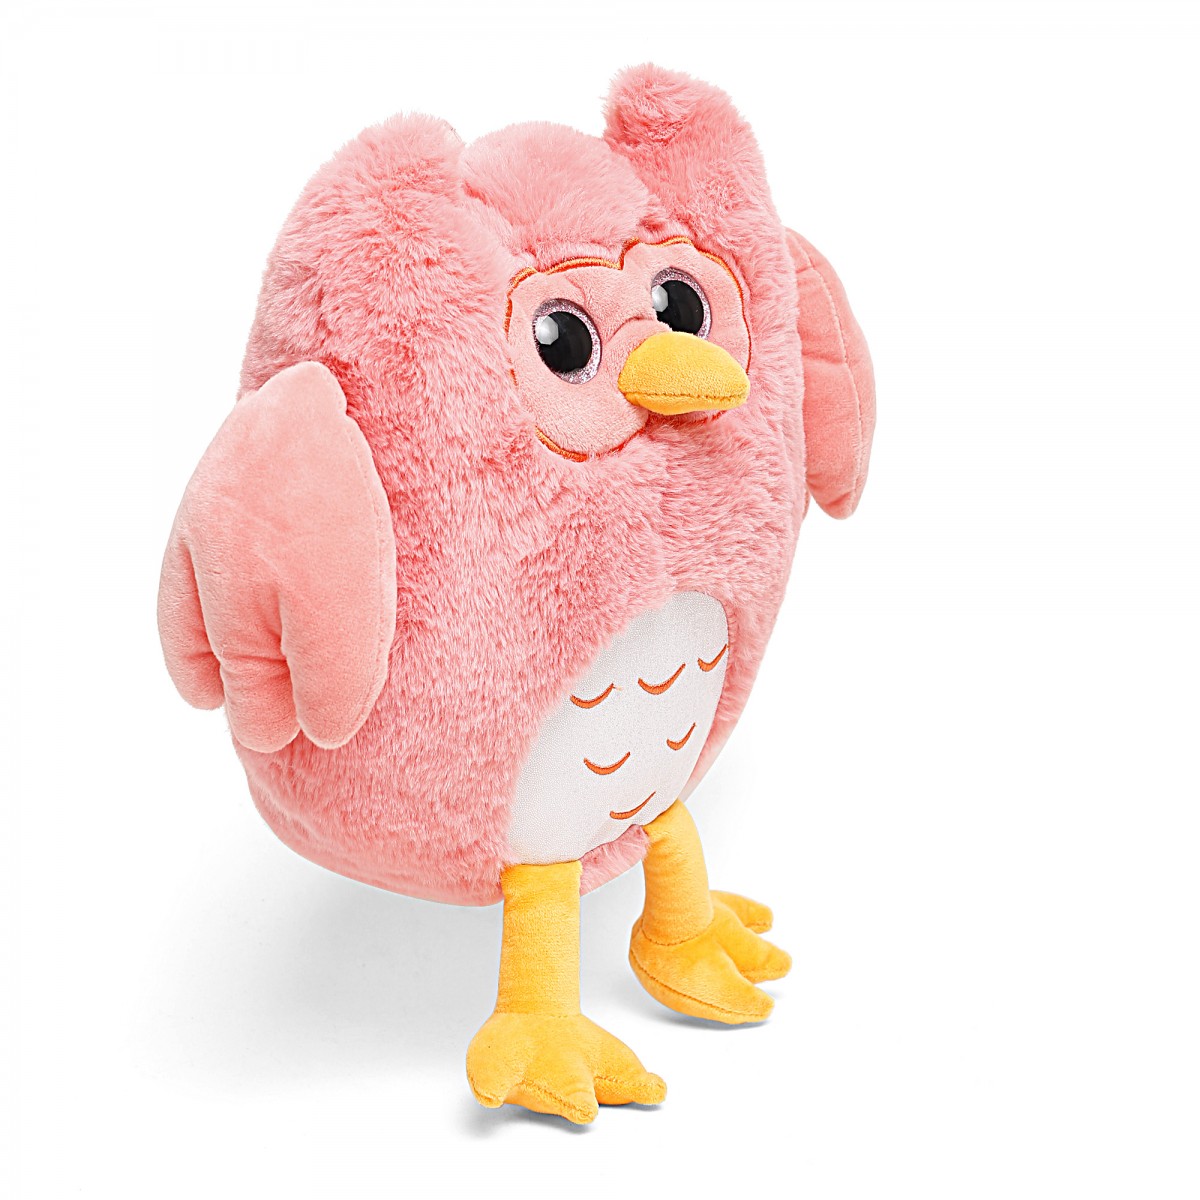 Fuzzbuzz Owl, Soft Toys for Kids, Coral, 29cm